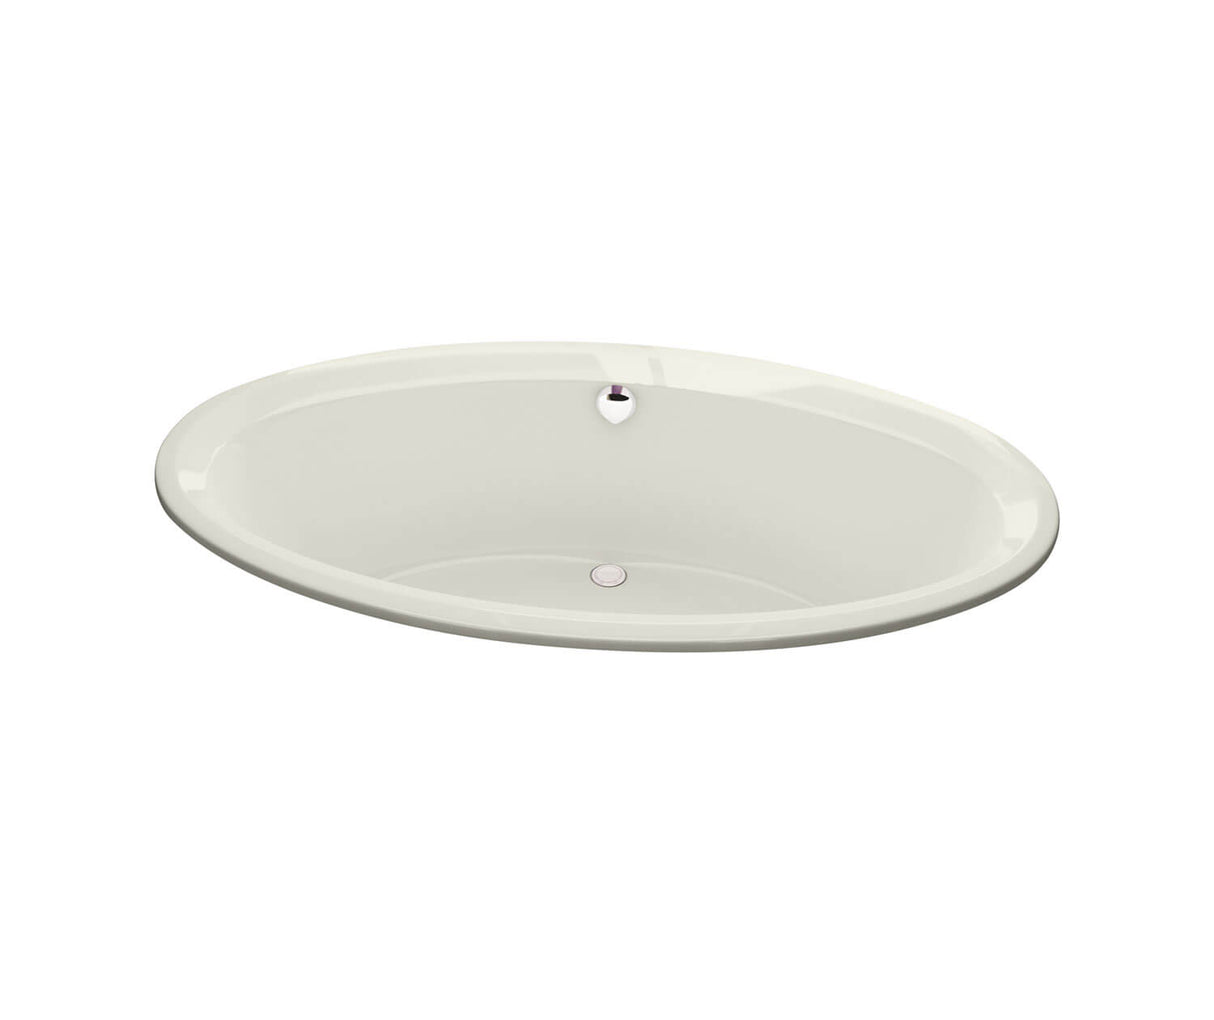 MAAX 100028-097-007-000 Tympani 72 x 42 Acrylic Drop-in Center Drain Combined Whirlpool & Aeroeffect Bathtub in Biscuit